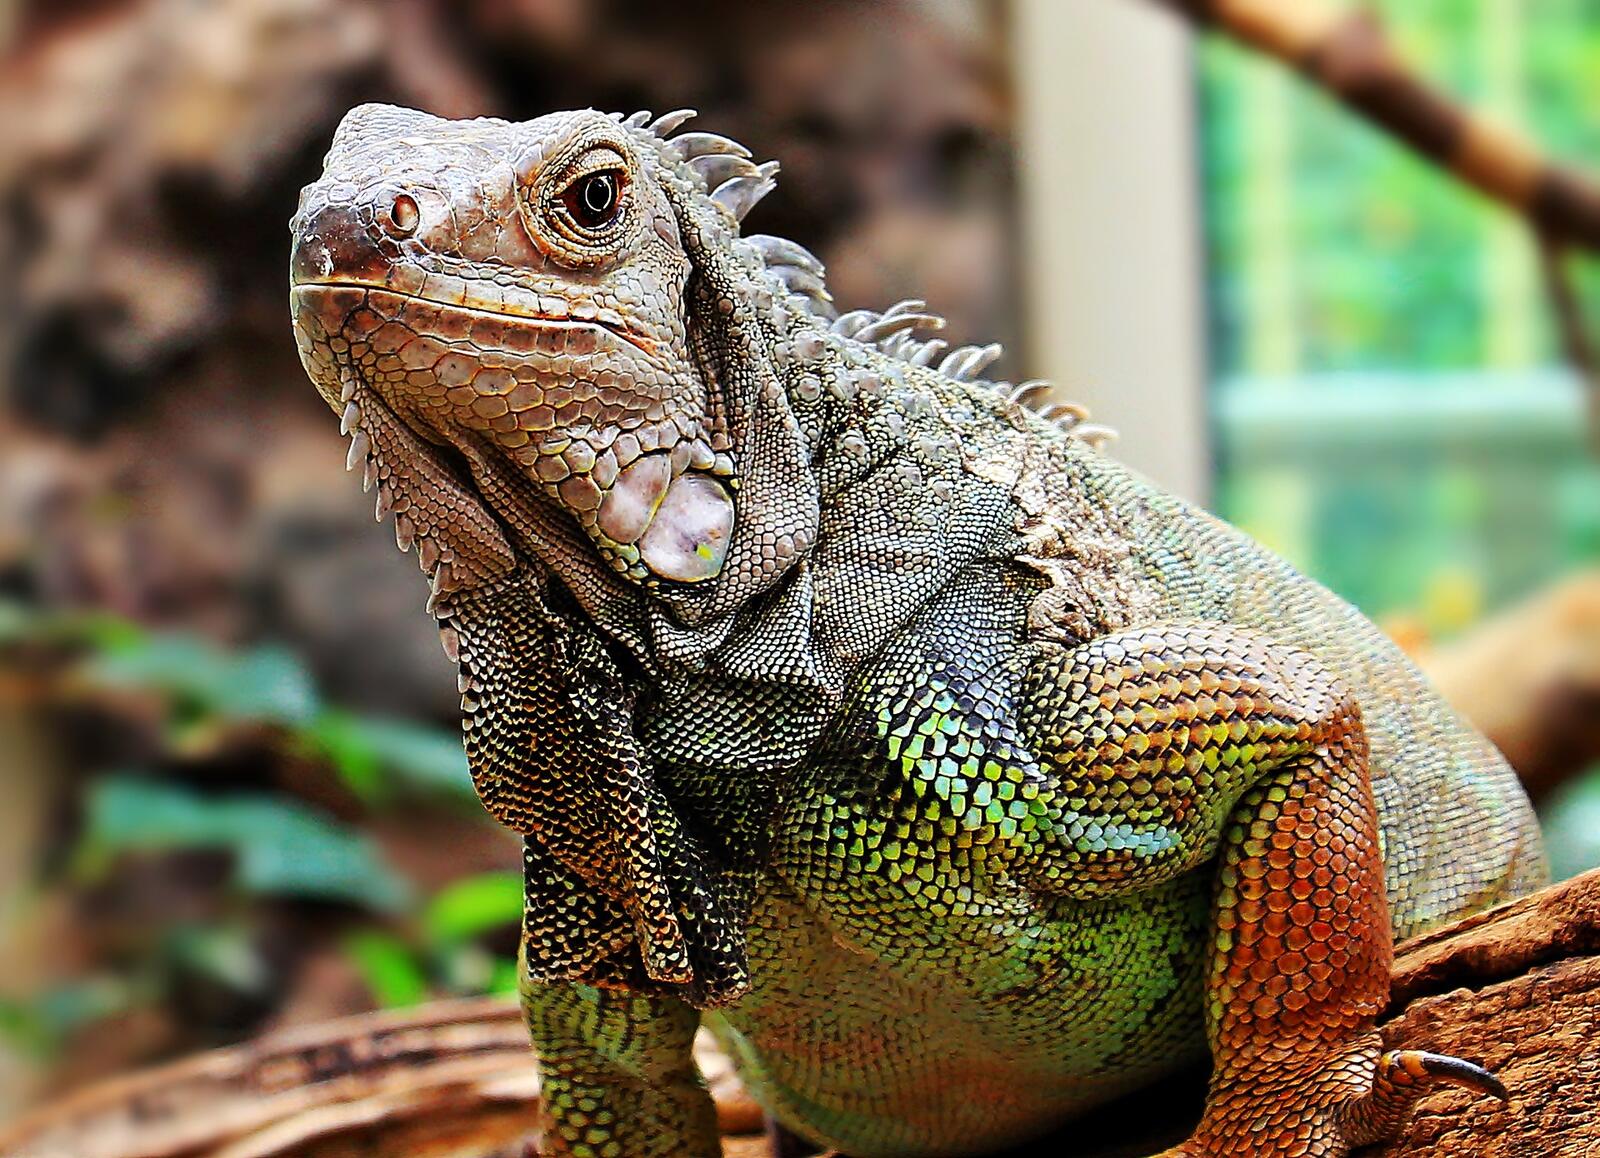 Wallpapers lizard freen iguana on the desktop